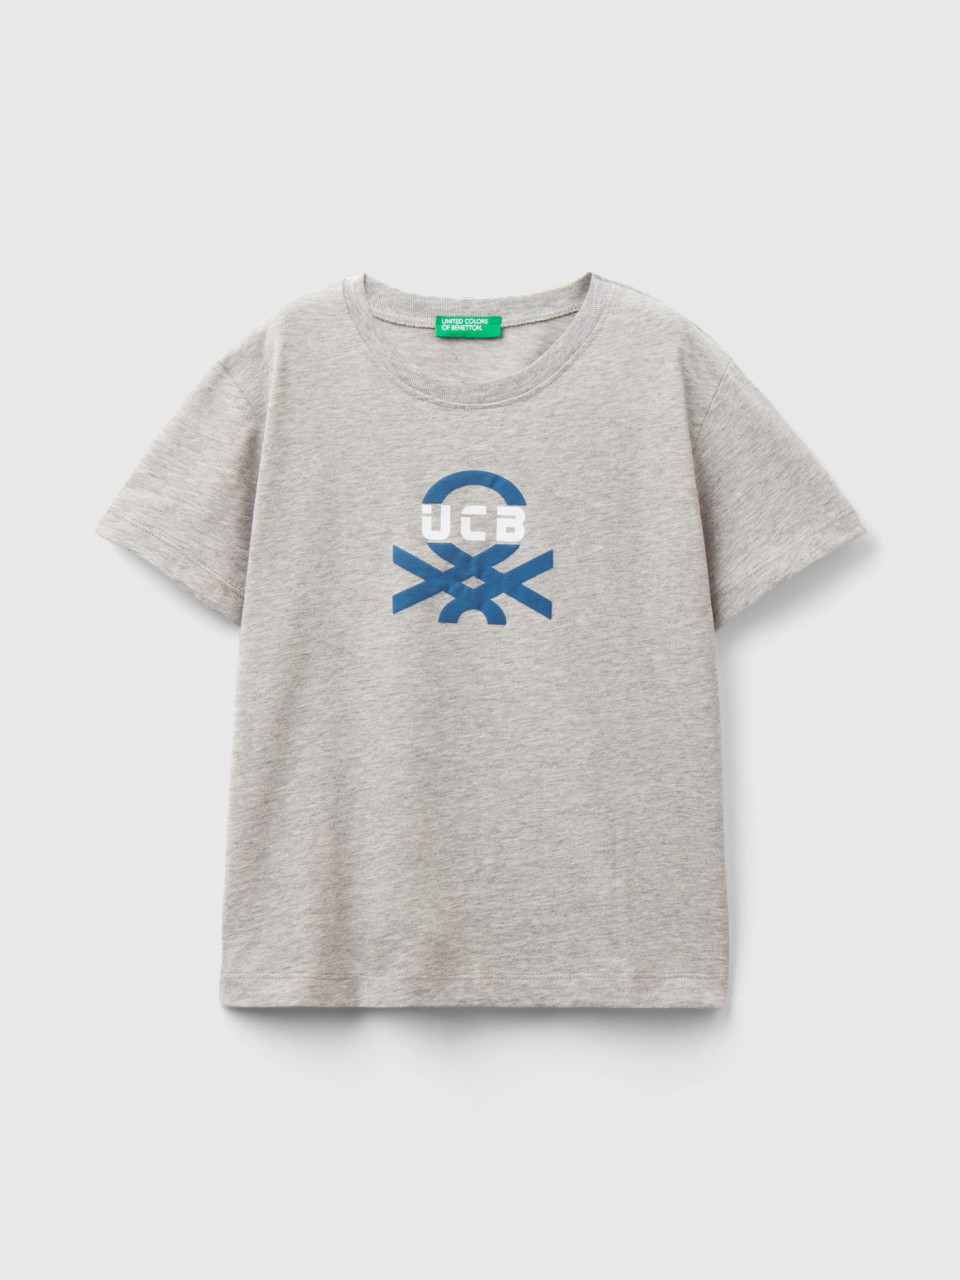 Benetton, T-shirt With Print In 100% Organic Cotton, Light Gray, Kids